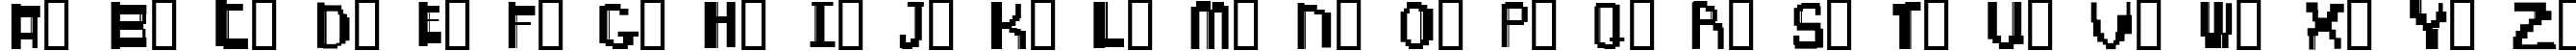 Пример написания английского алфавита шрифтом Chunk Norris